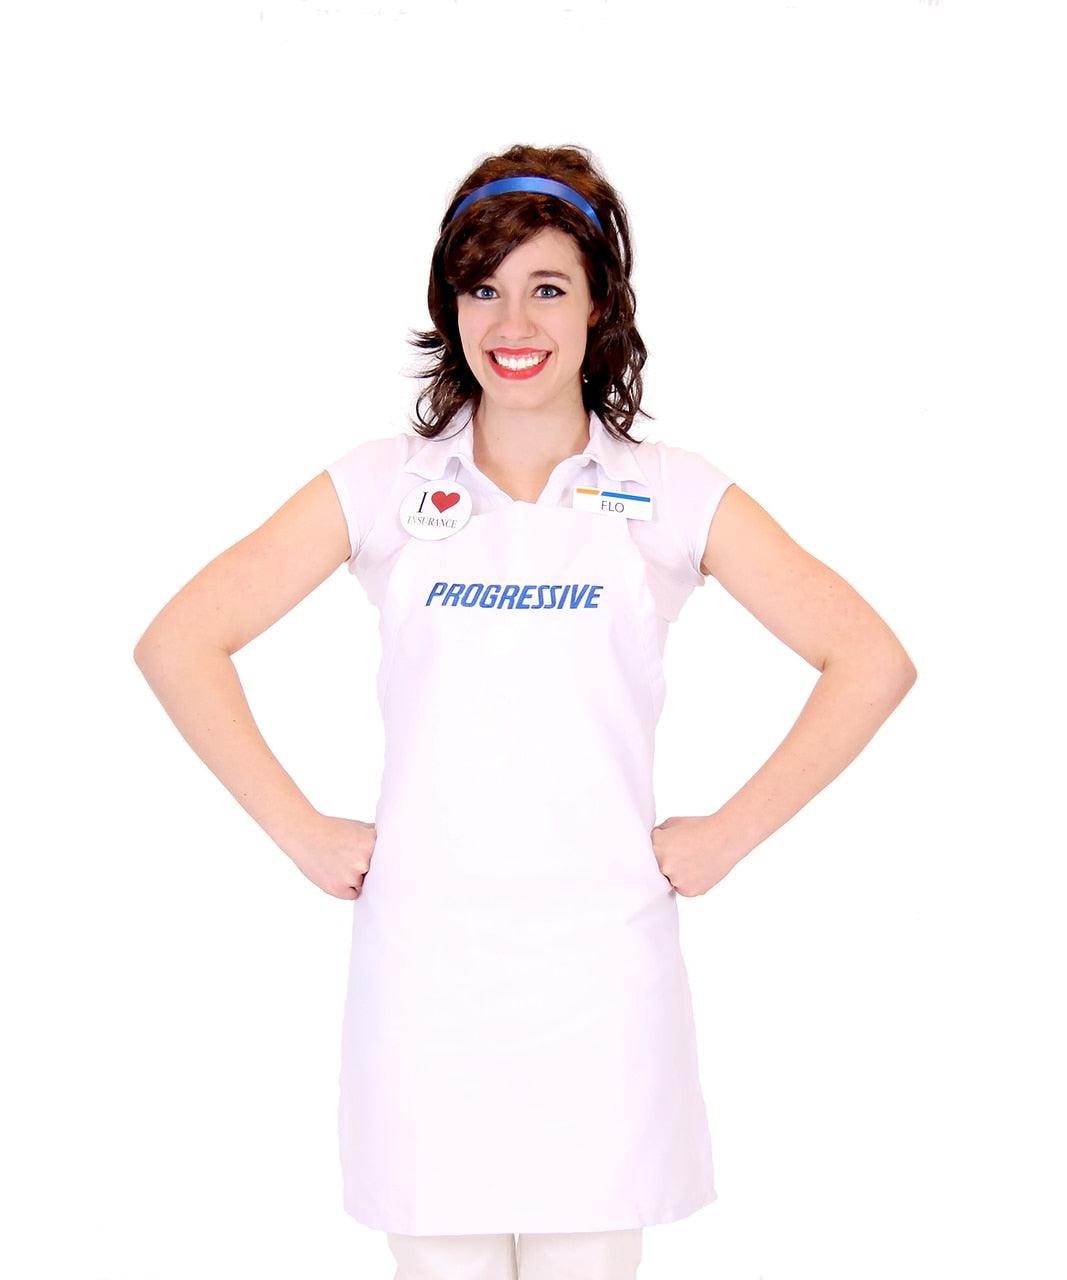 Progressive Flo Insurance Girl Costume Set-tvso